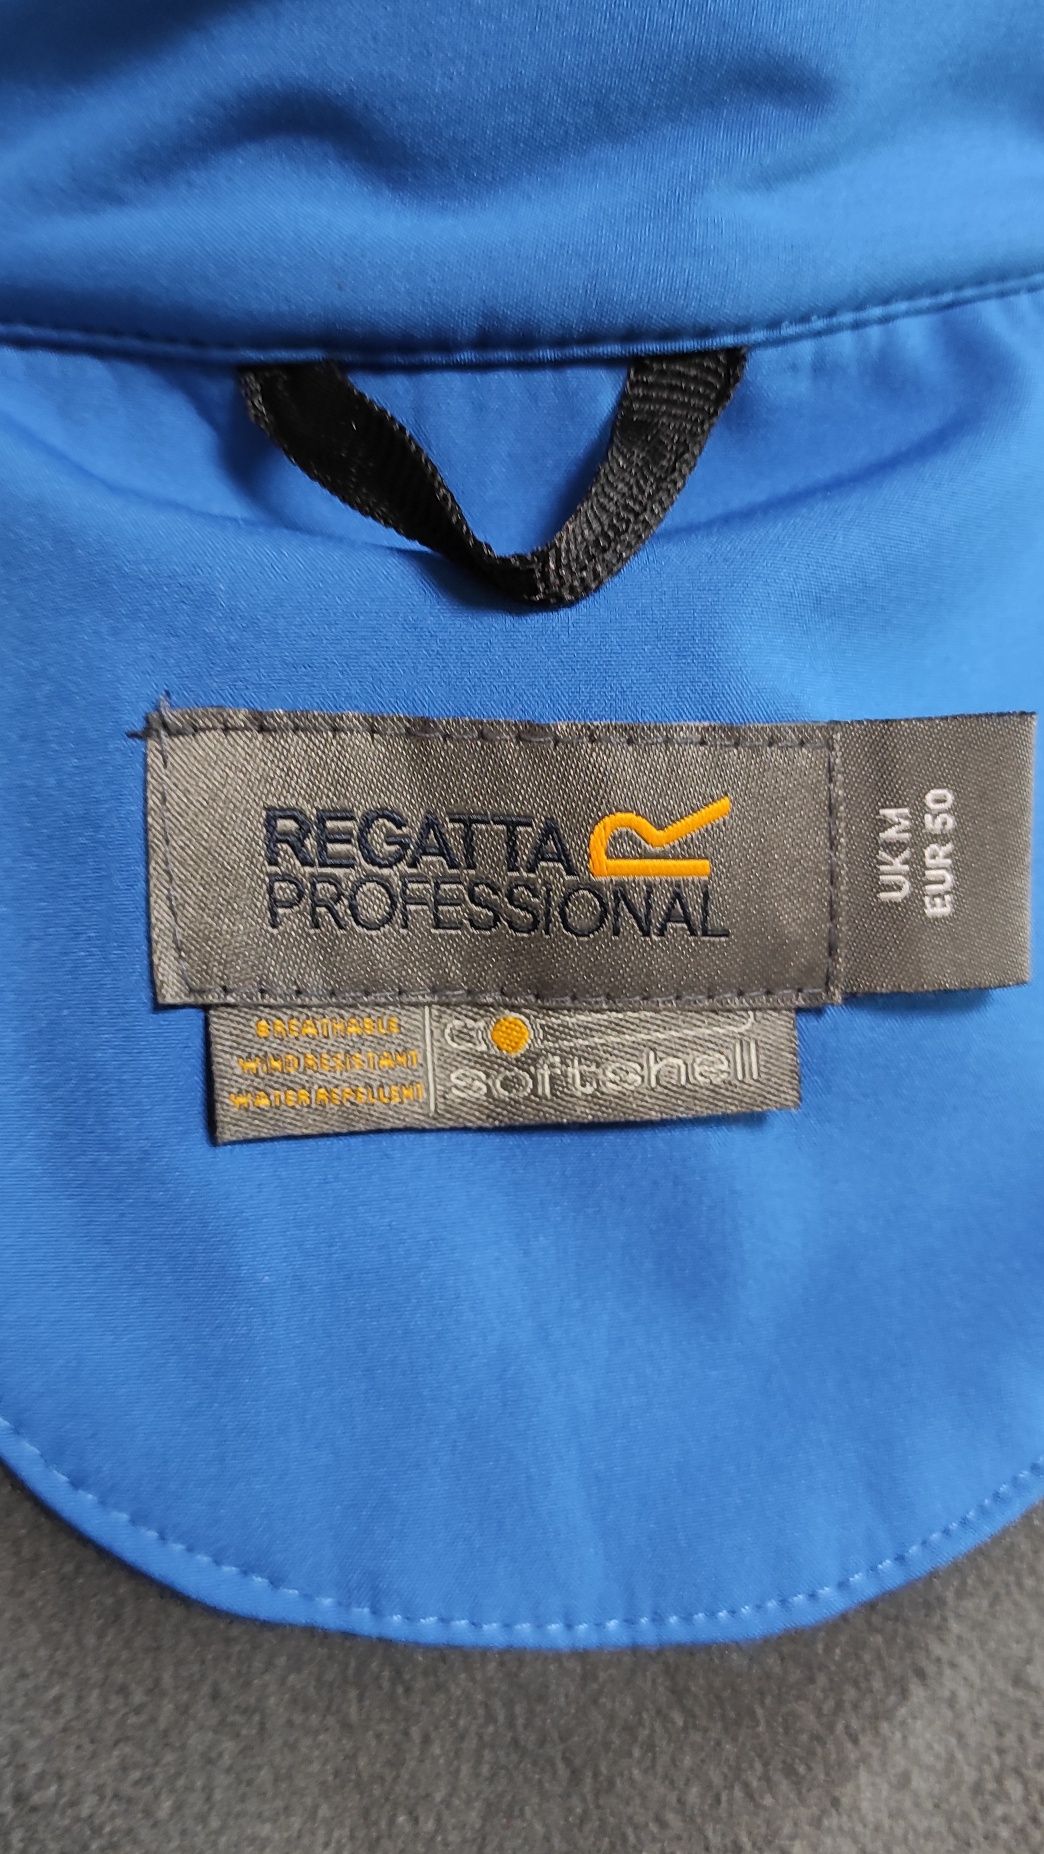 Regatta Professional новая термокуртка, размер М EUR 50